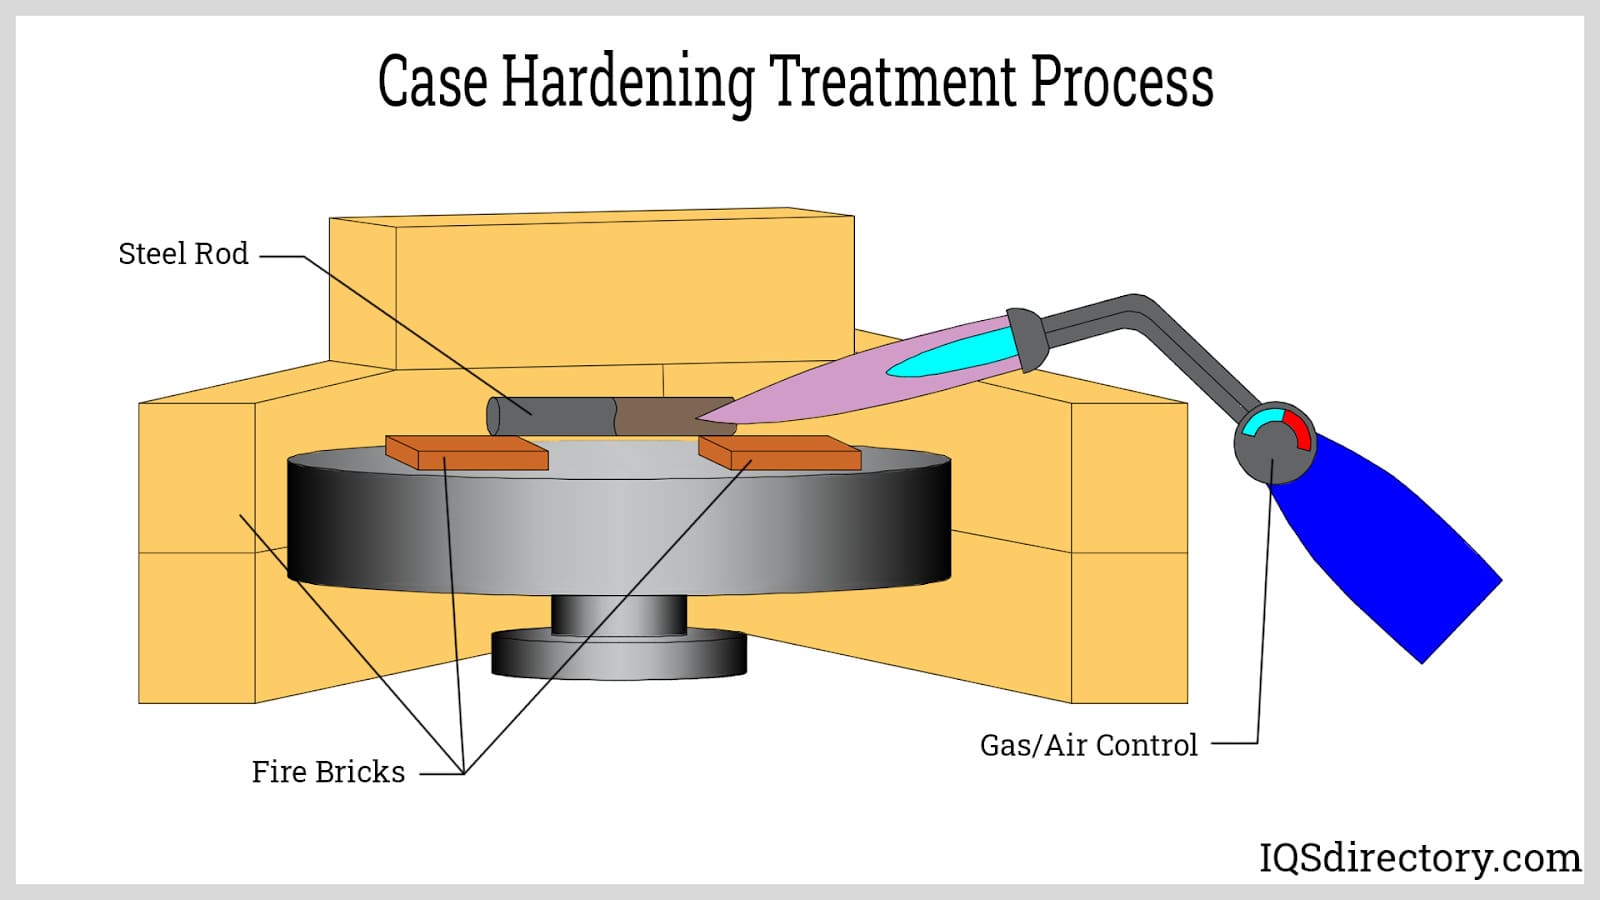 Case Hardening Treatment Process